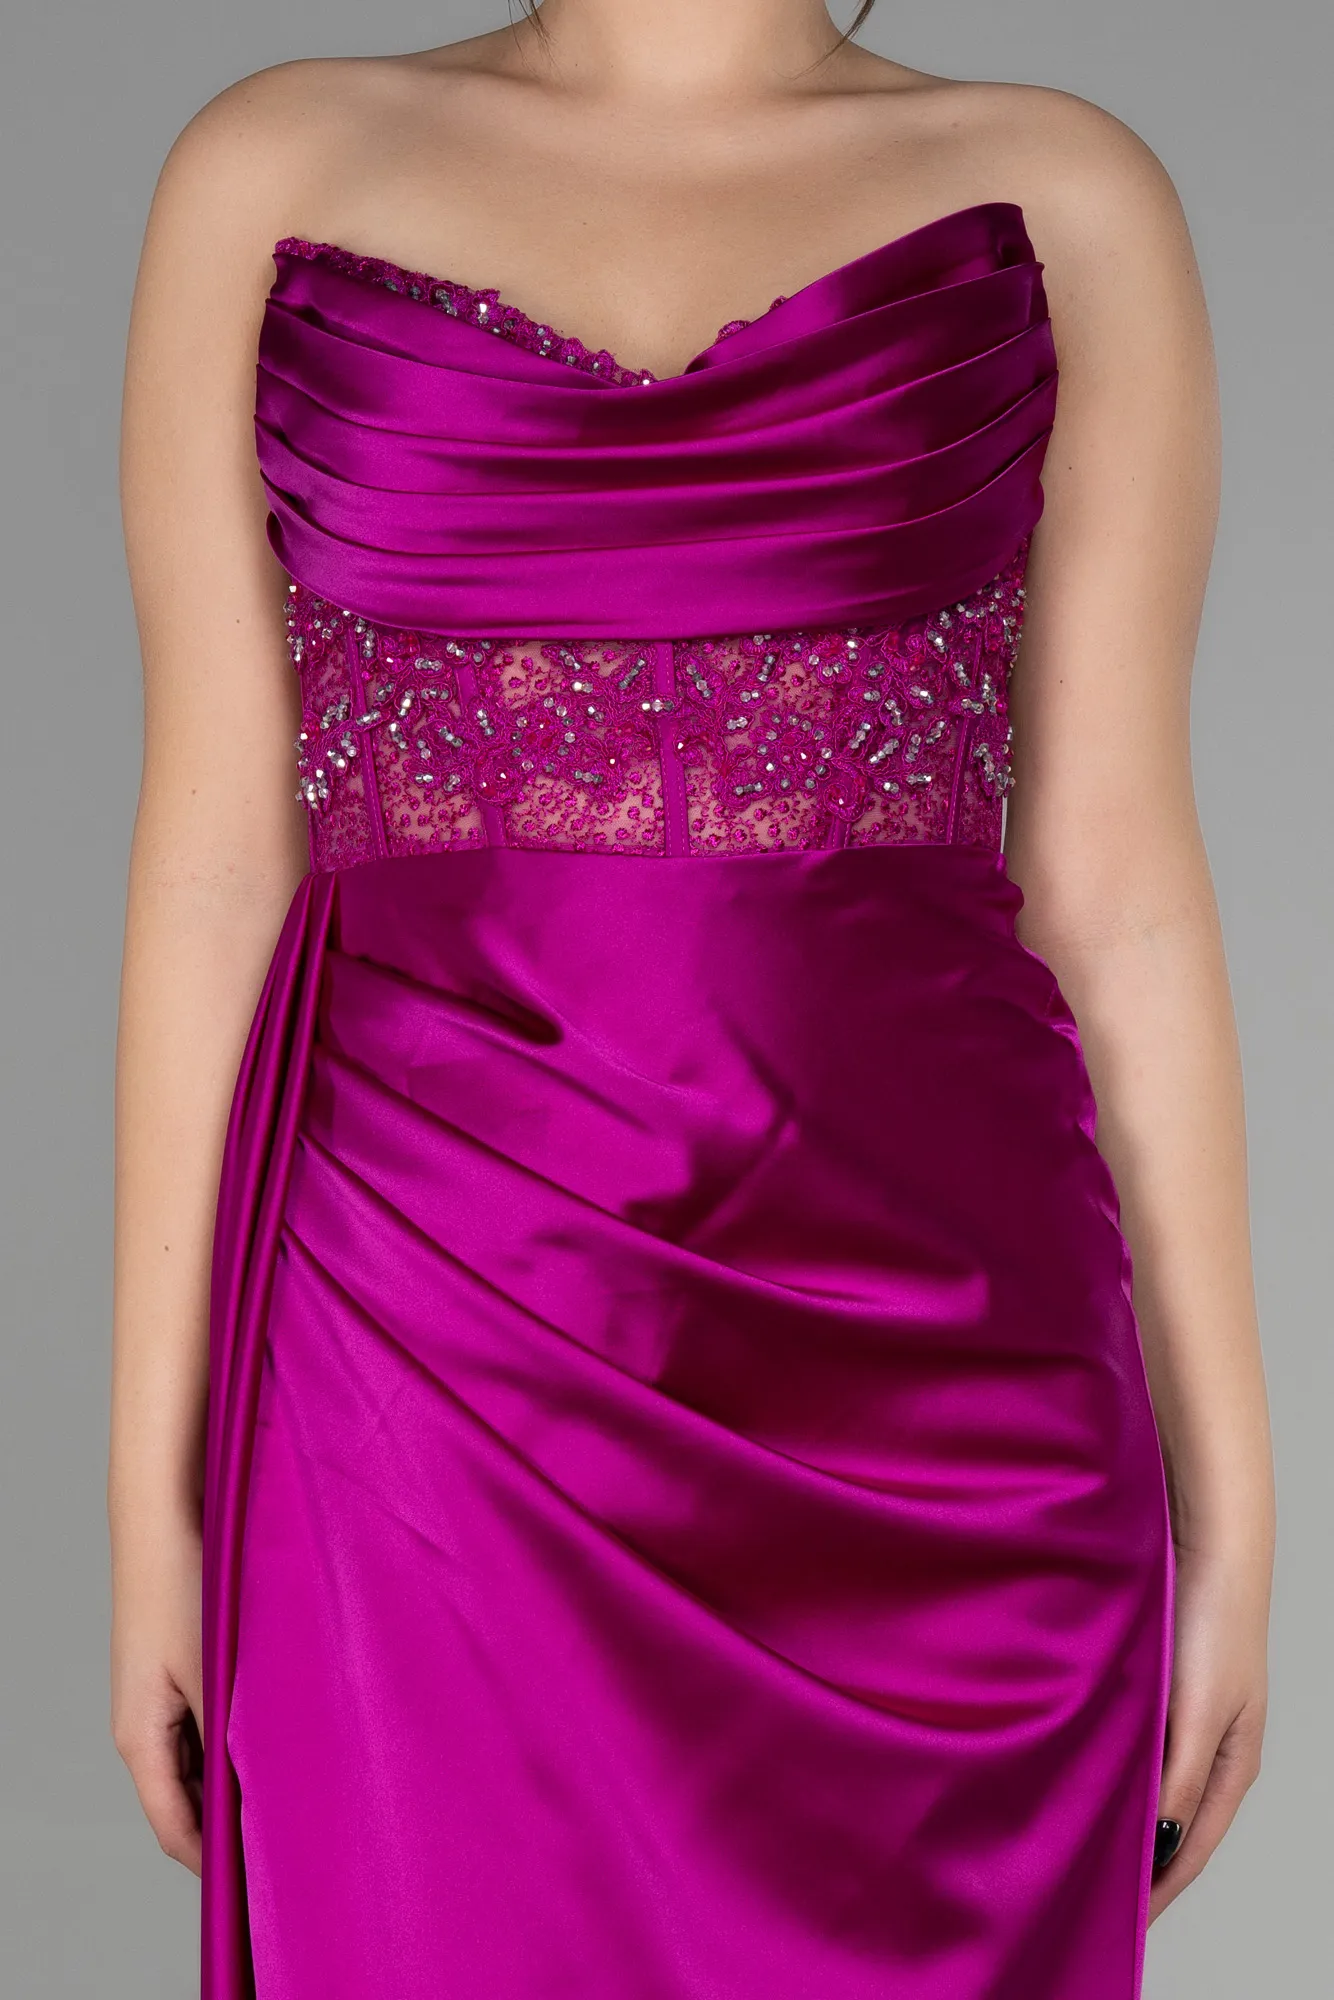 Violet-Long Satin Evening Dress ABU3447